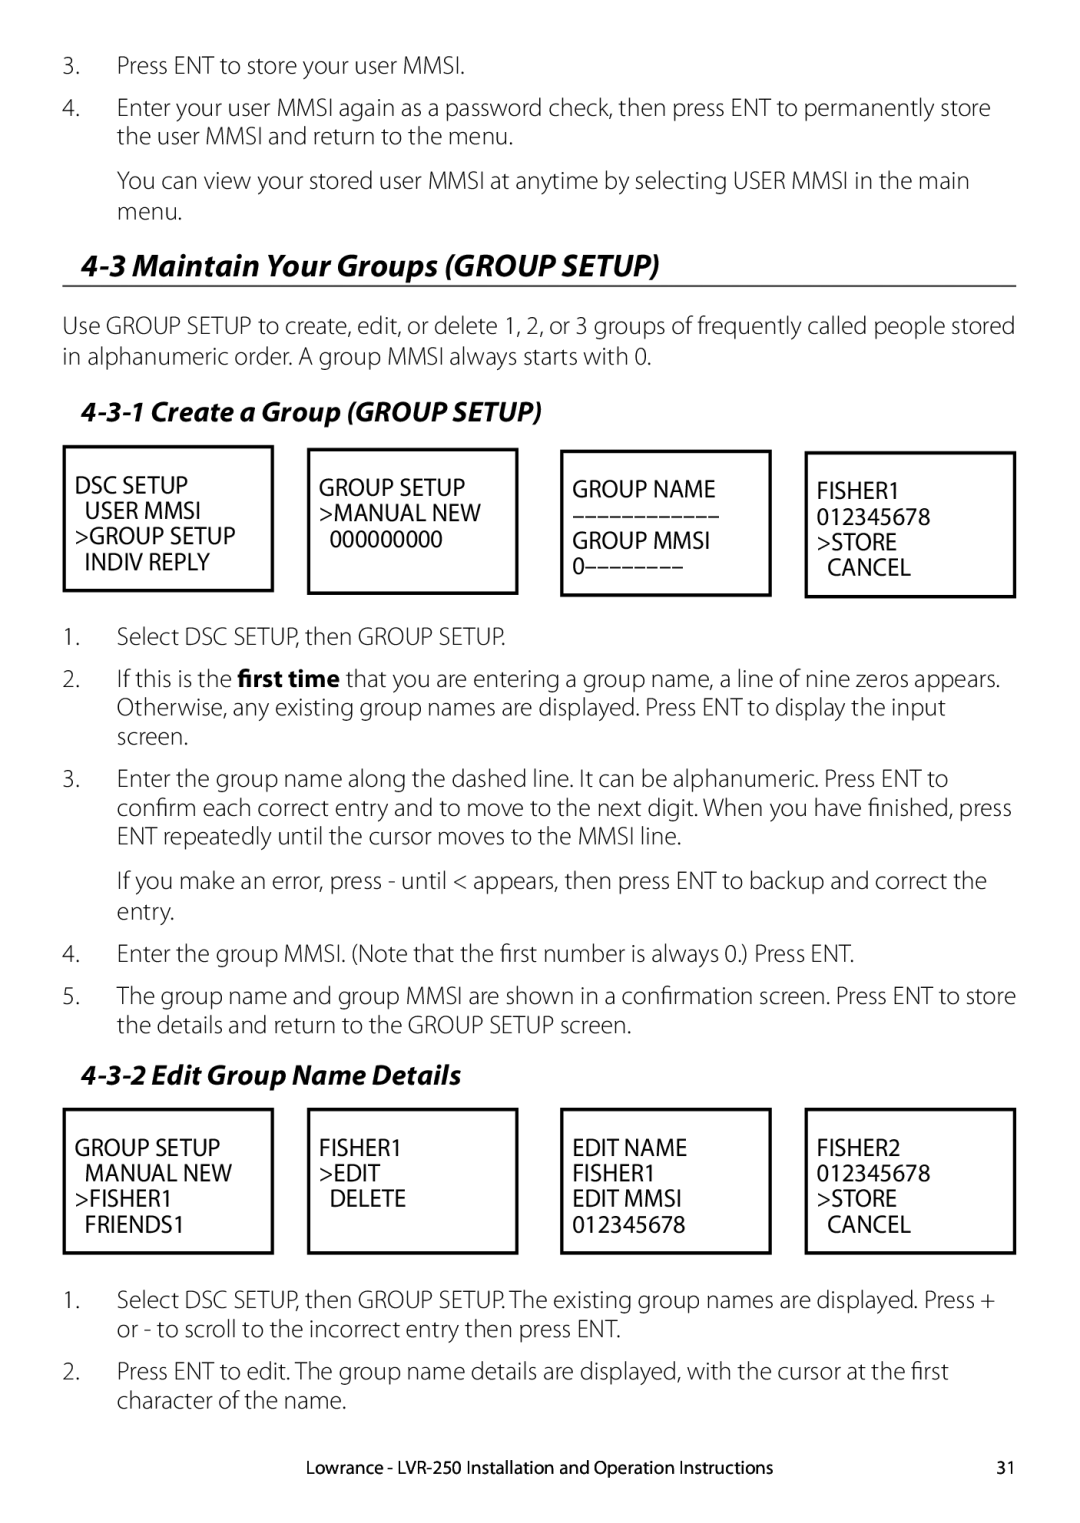 Lowrance electronic LVR-250 manual 4-3Maintain Your Groups GROUP SETUP, 4-3-1Create a Group GROUP SETUP 